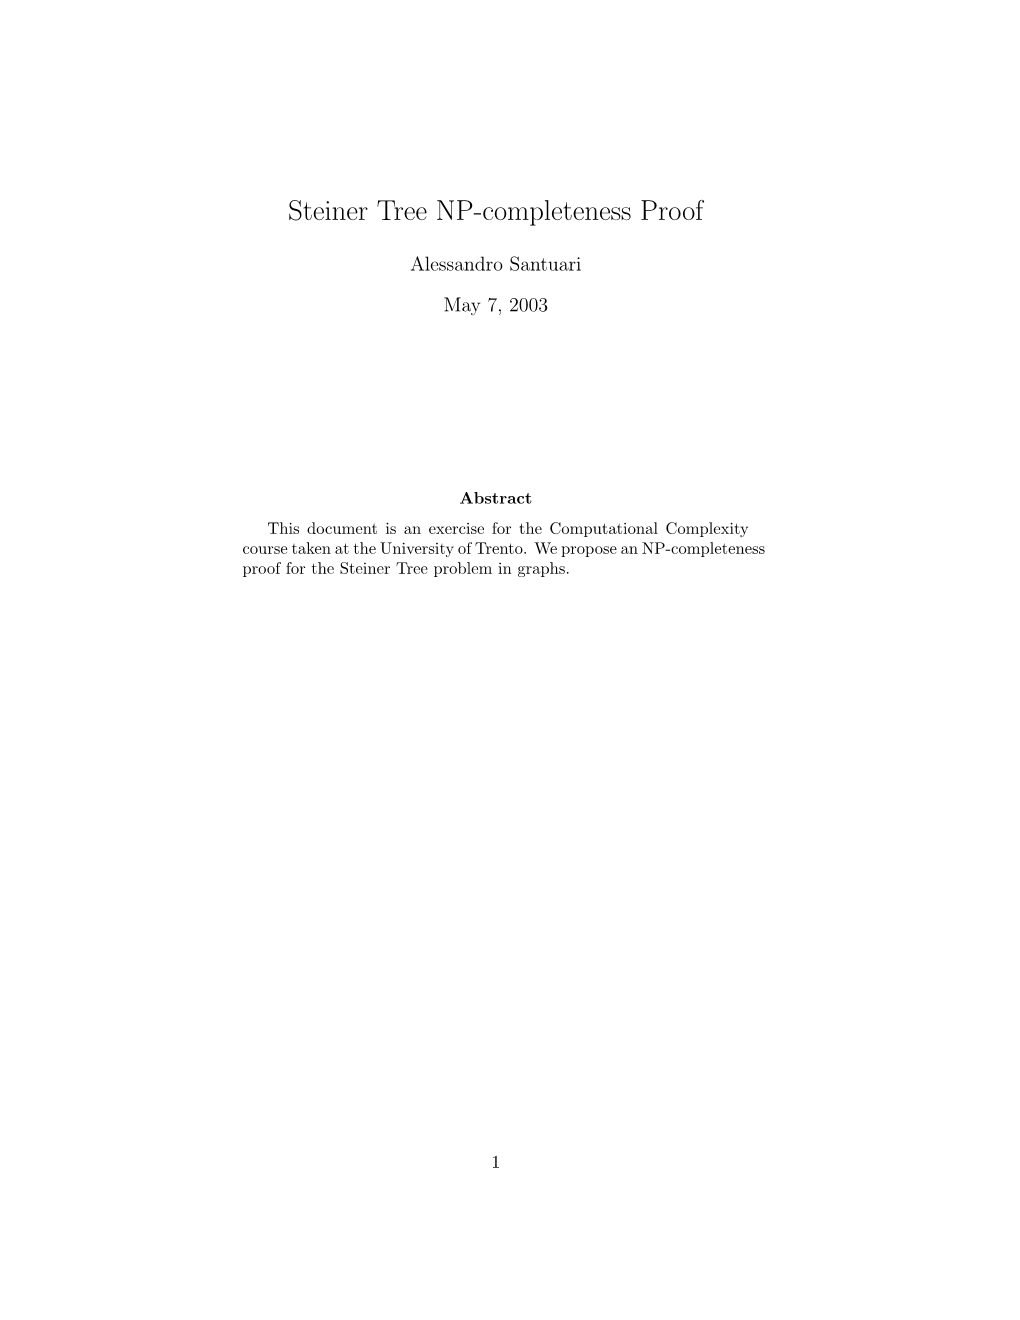 Steiner Tree NP-Completeness Proof